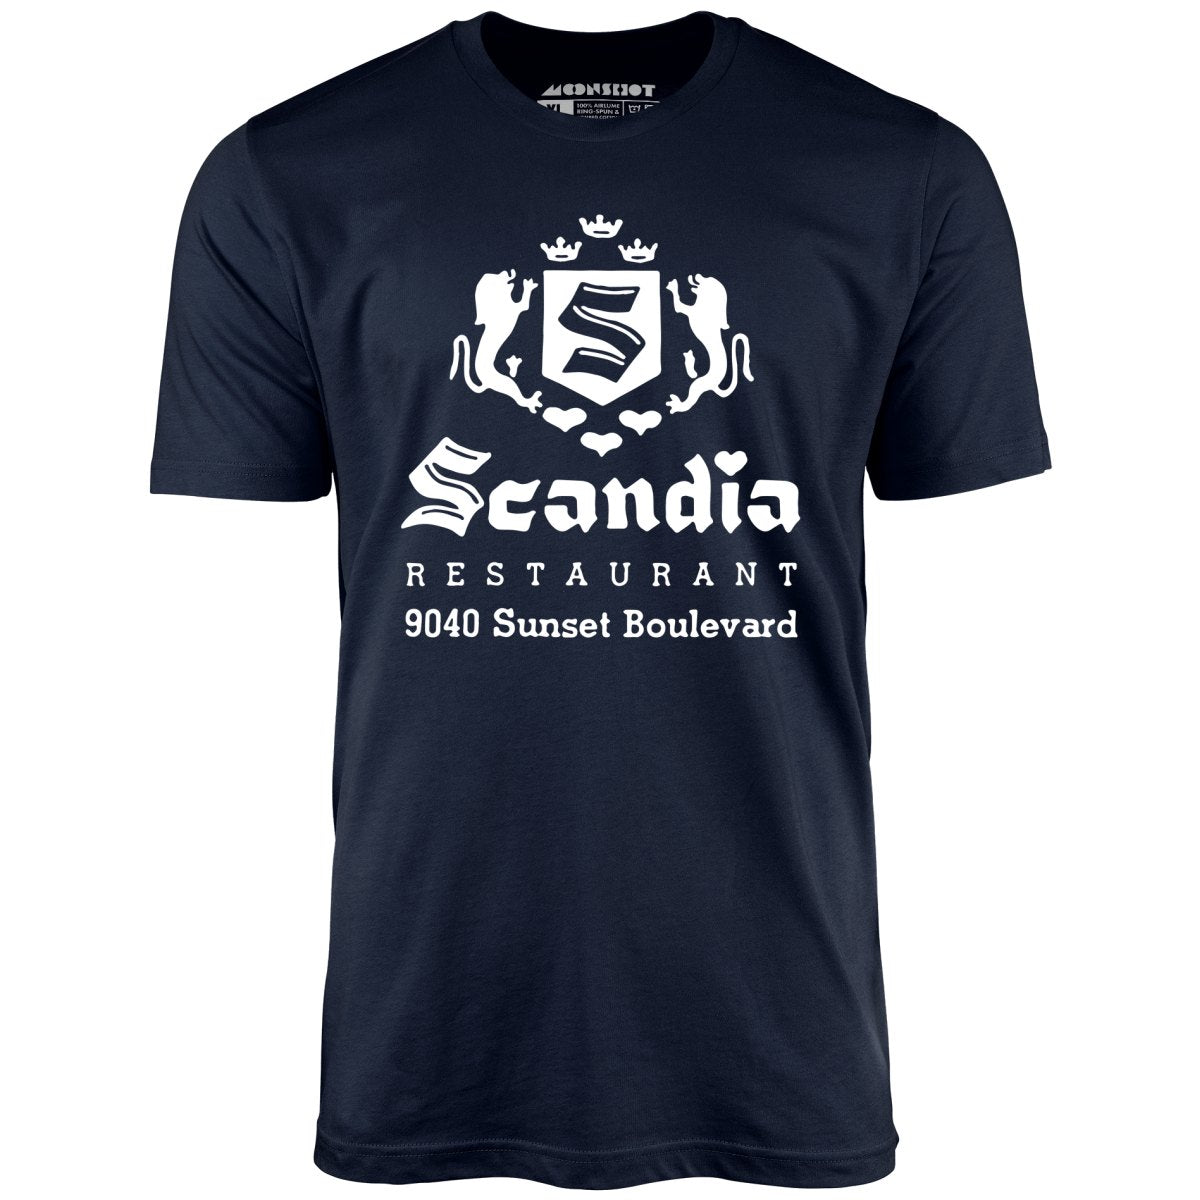 Scandia - West Hollywood, CA - Vintage Restaurant - Unisex T-Shirt